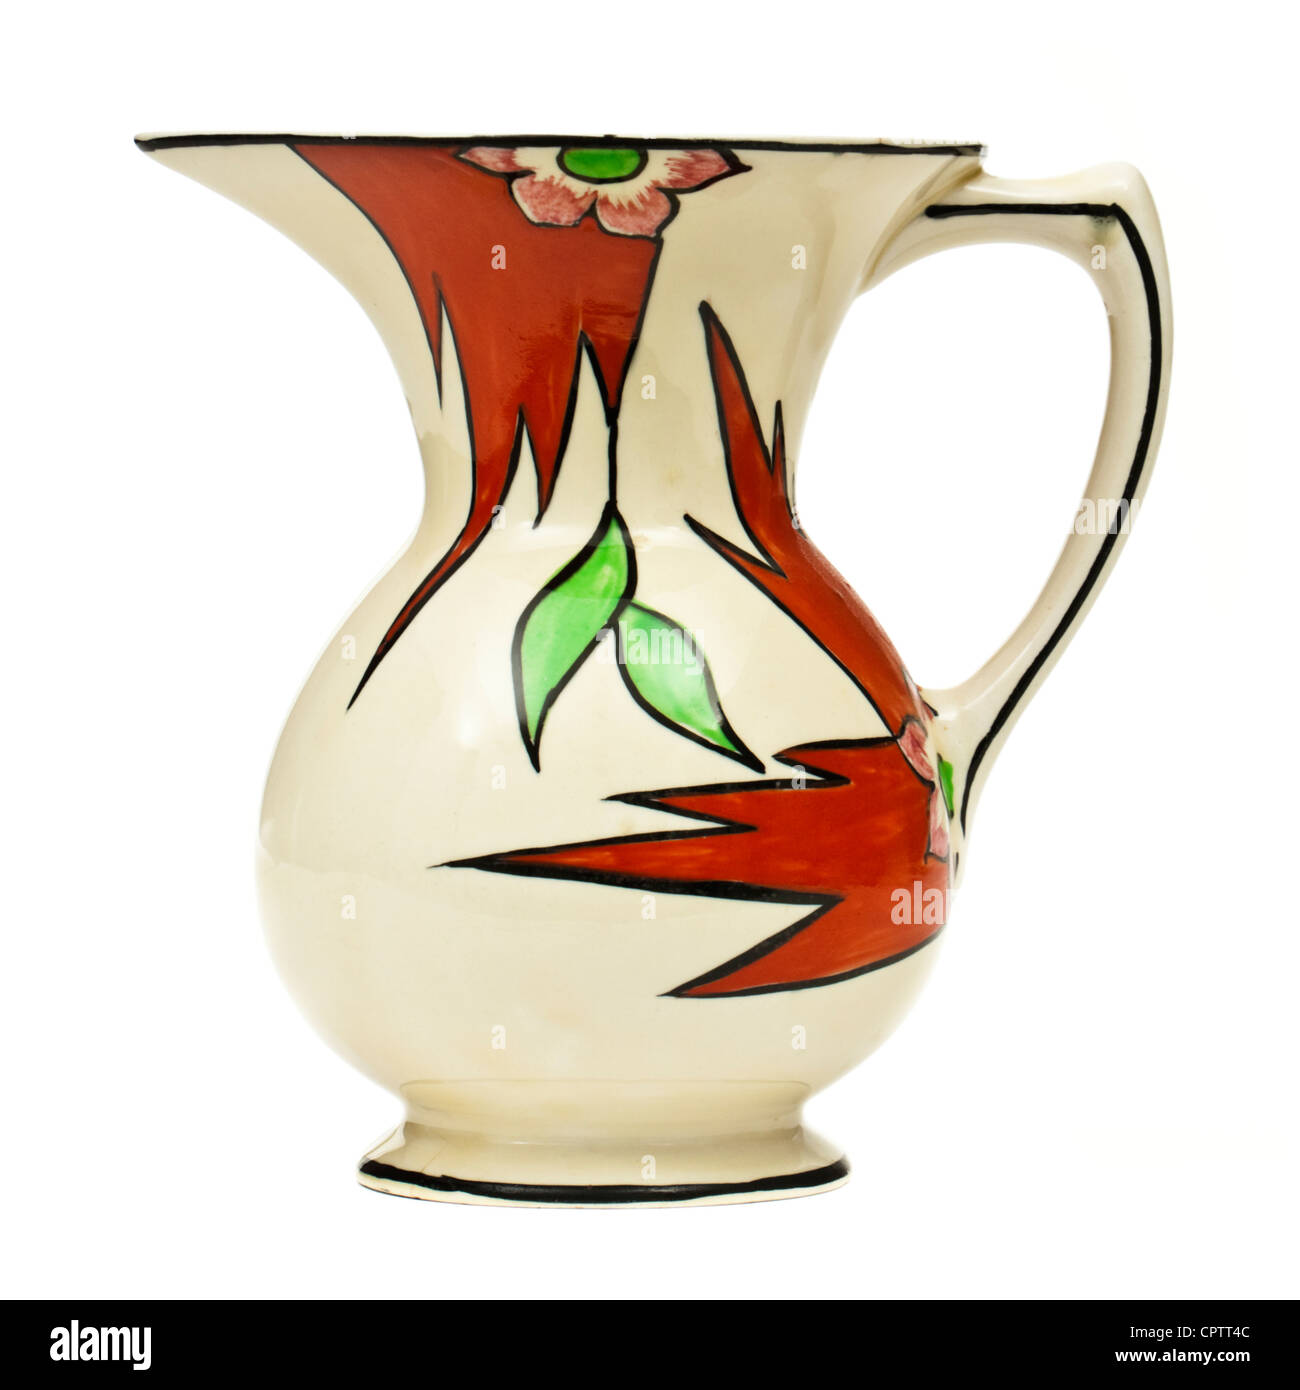 1930 Art Deco dipinta a mano brocca da Hughes in ceramica, Longport,  Inghilterra Foto stock - Alamy